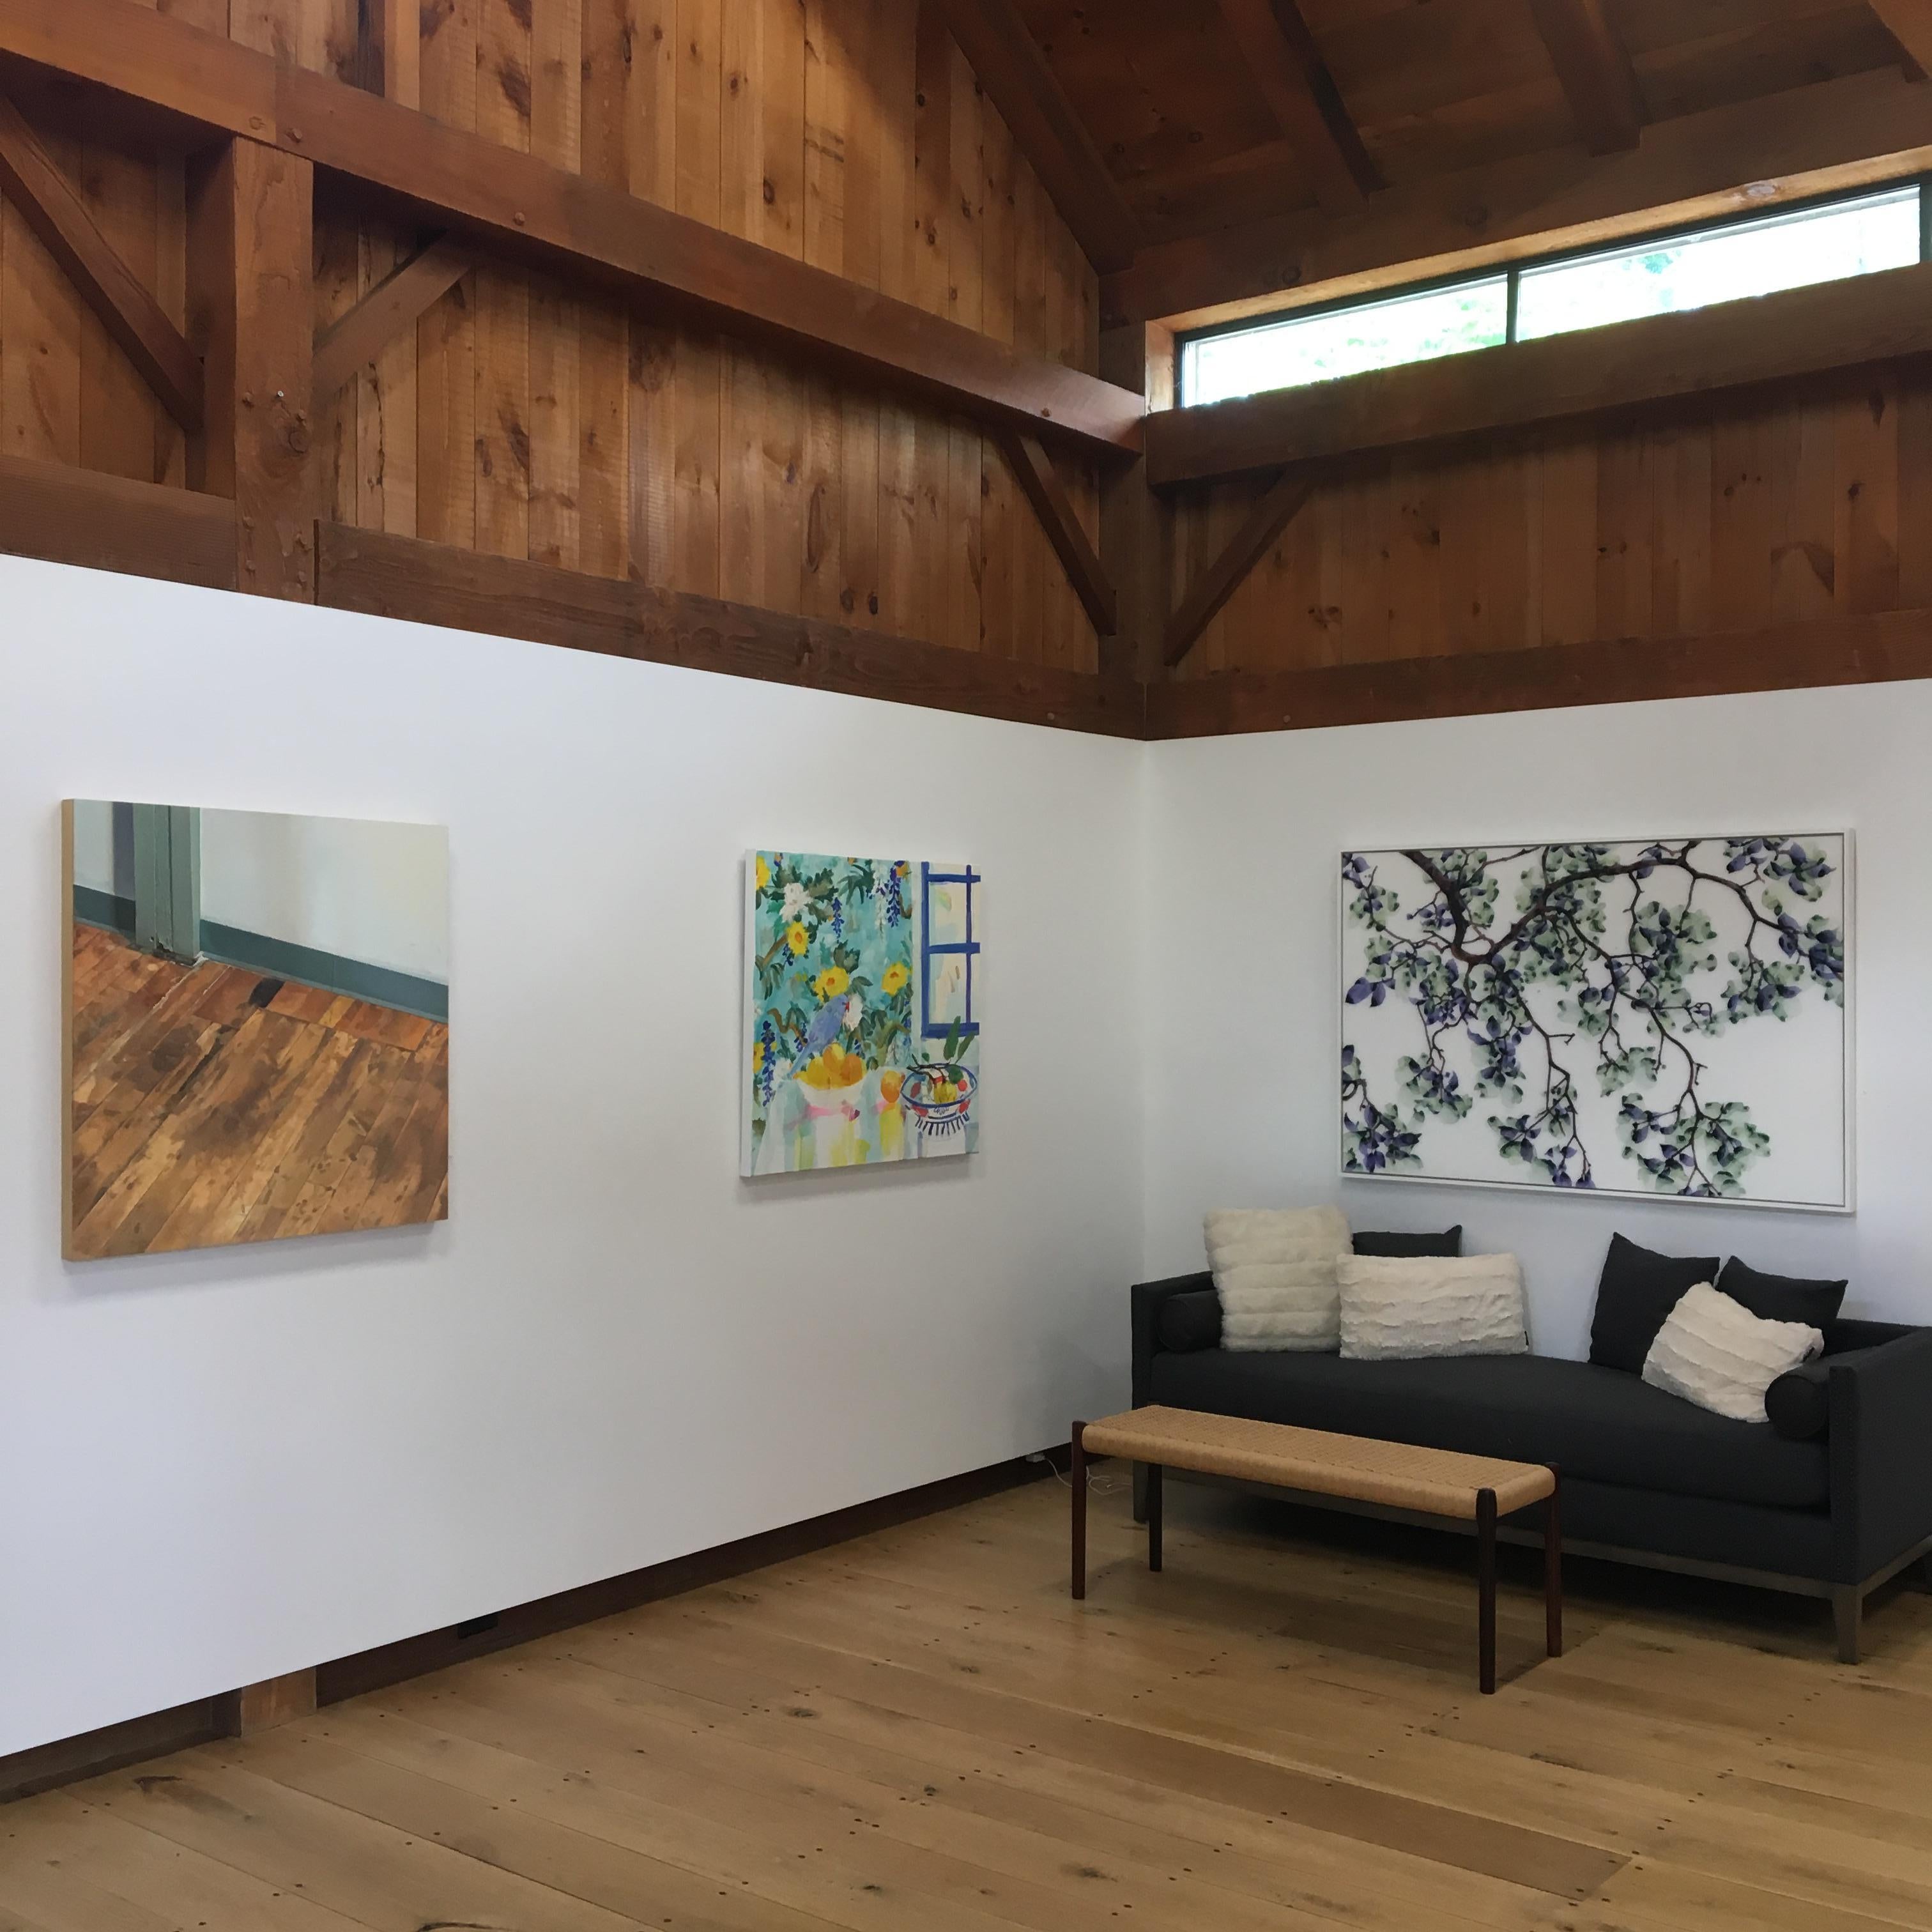 Hallway Floor, Woodgrain Floorboards, Teal Baseboard, White Room Interior Scene - Contemporary Painting by Brett Eberhardt